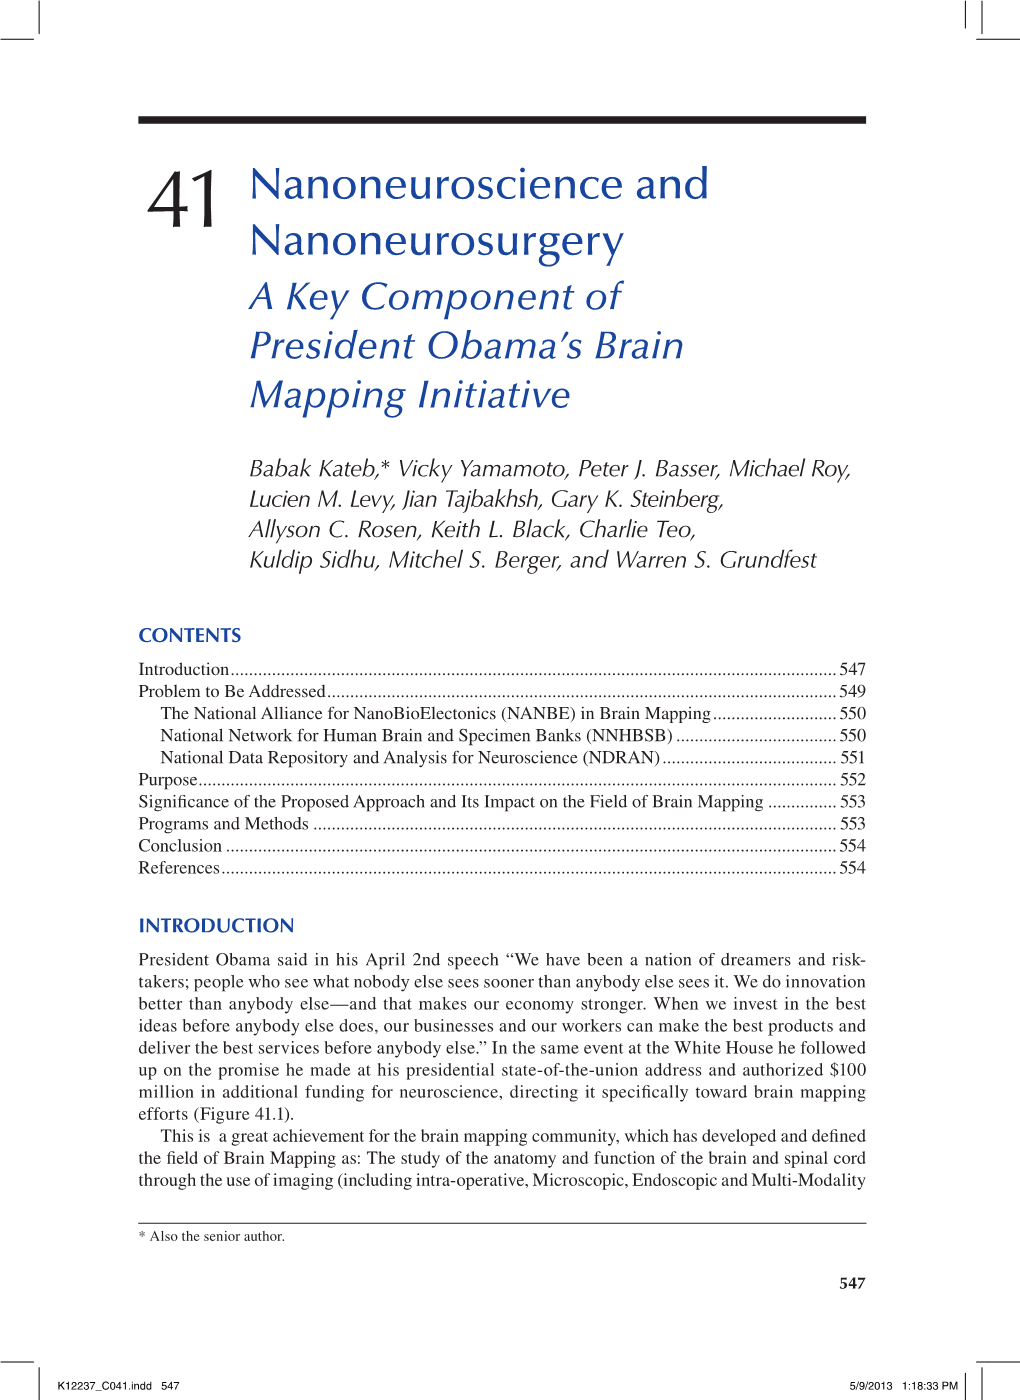 41 Nanoneuroscience and Nanoneurosurgery